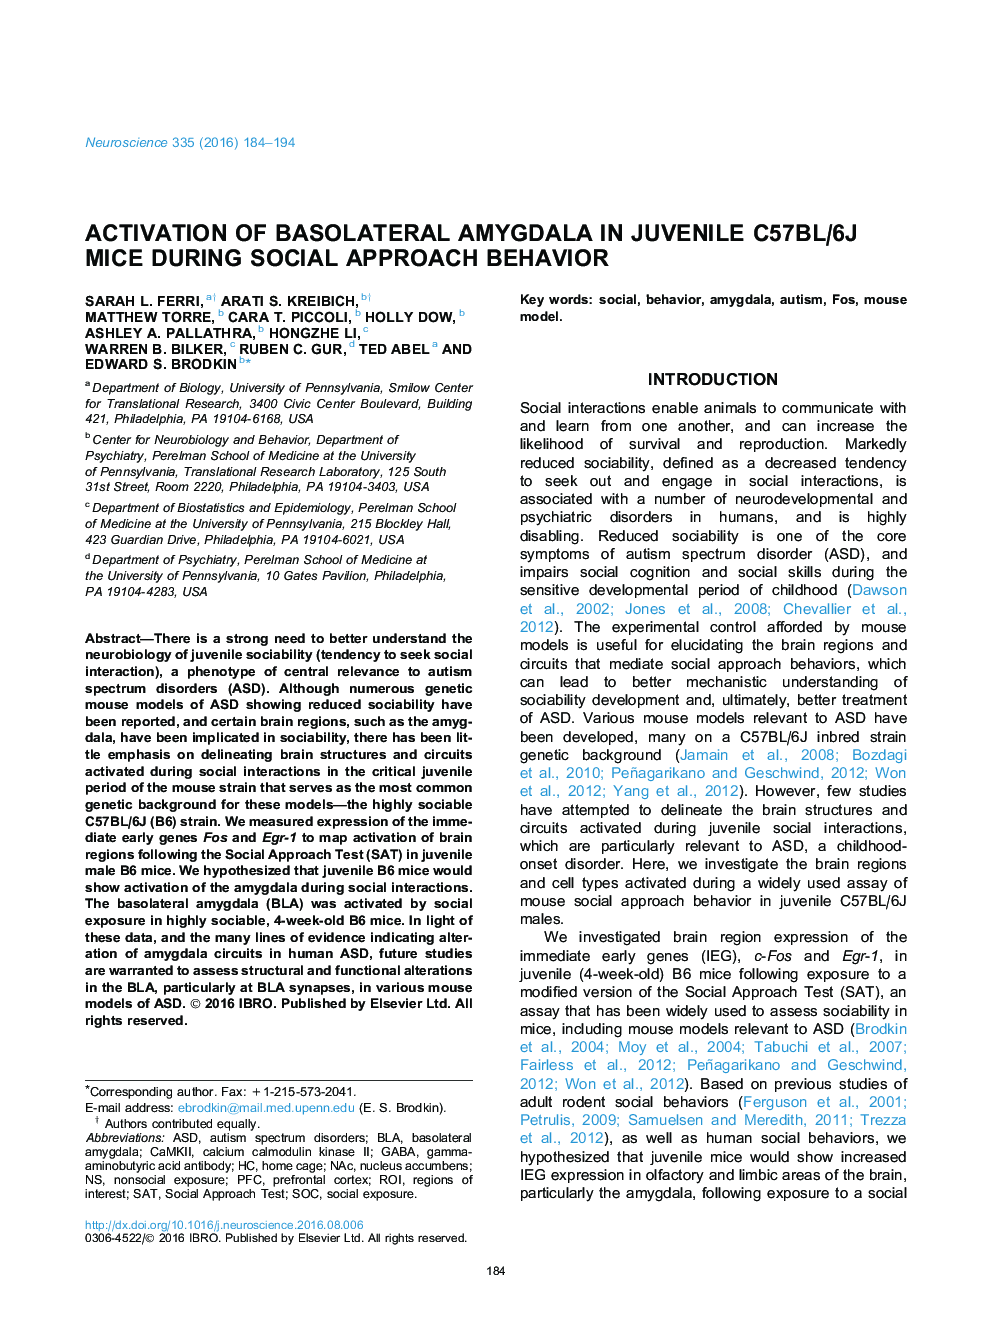 Activation of basolateral amygdala in juvenile C57BL/6J mice during social approach behavior